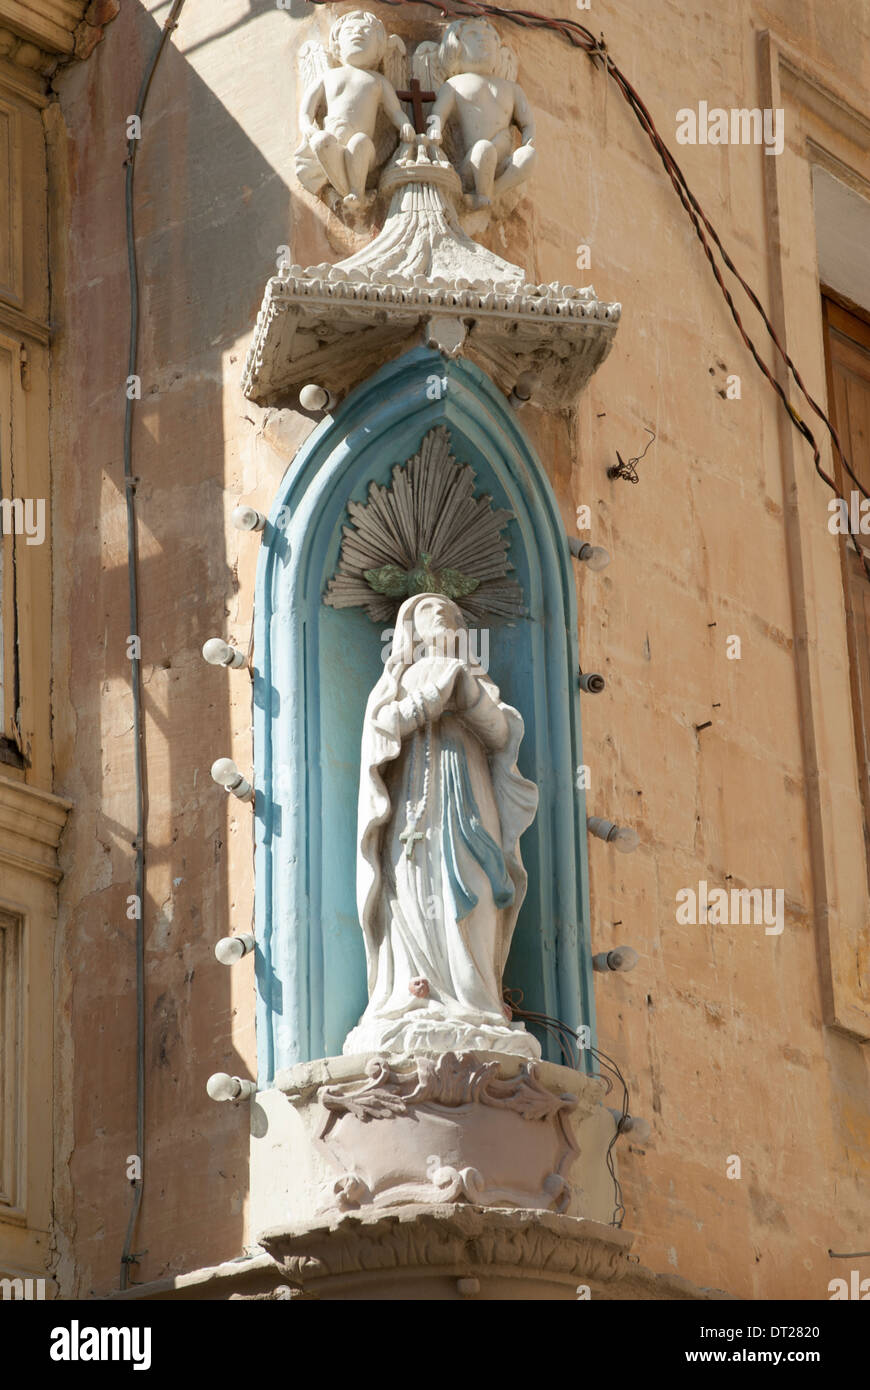 Effigy of the Virgin Mary above a street corner in Sliema, Malta. Most Maltese are devout Catholics. Stock Photo